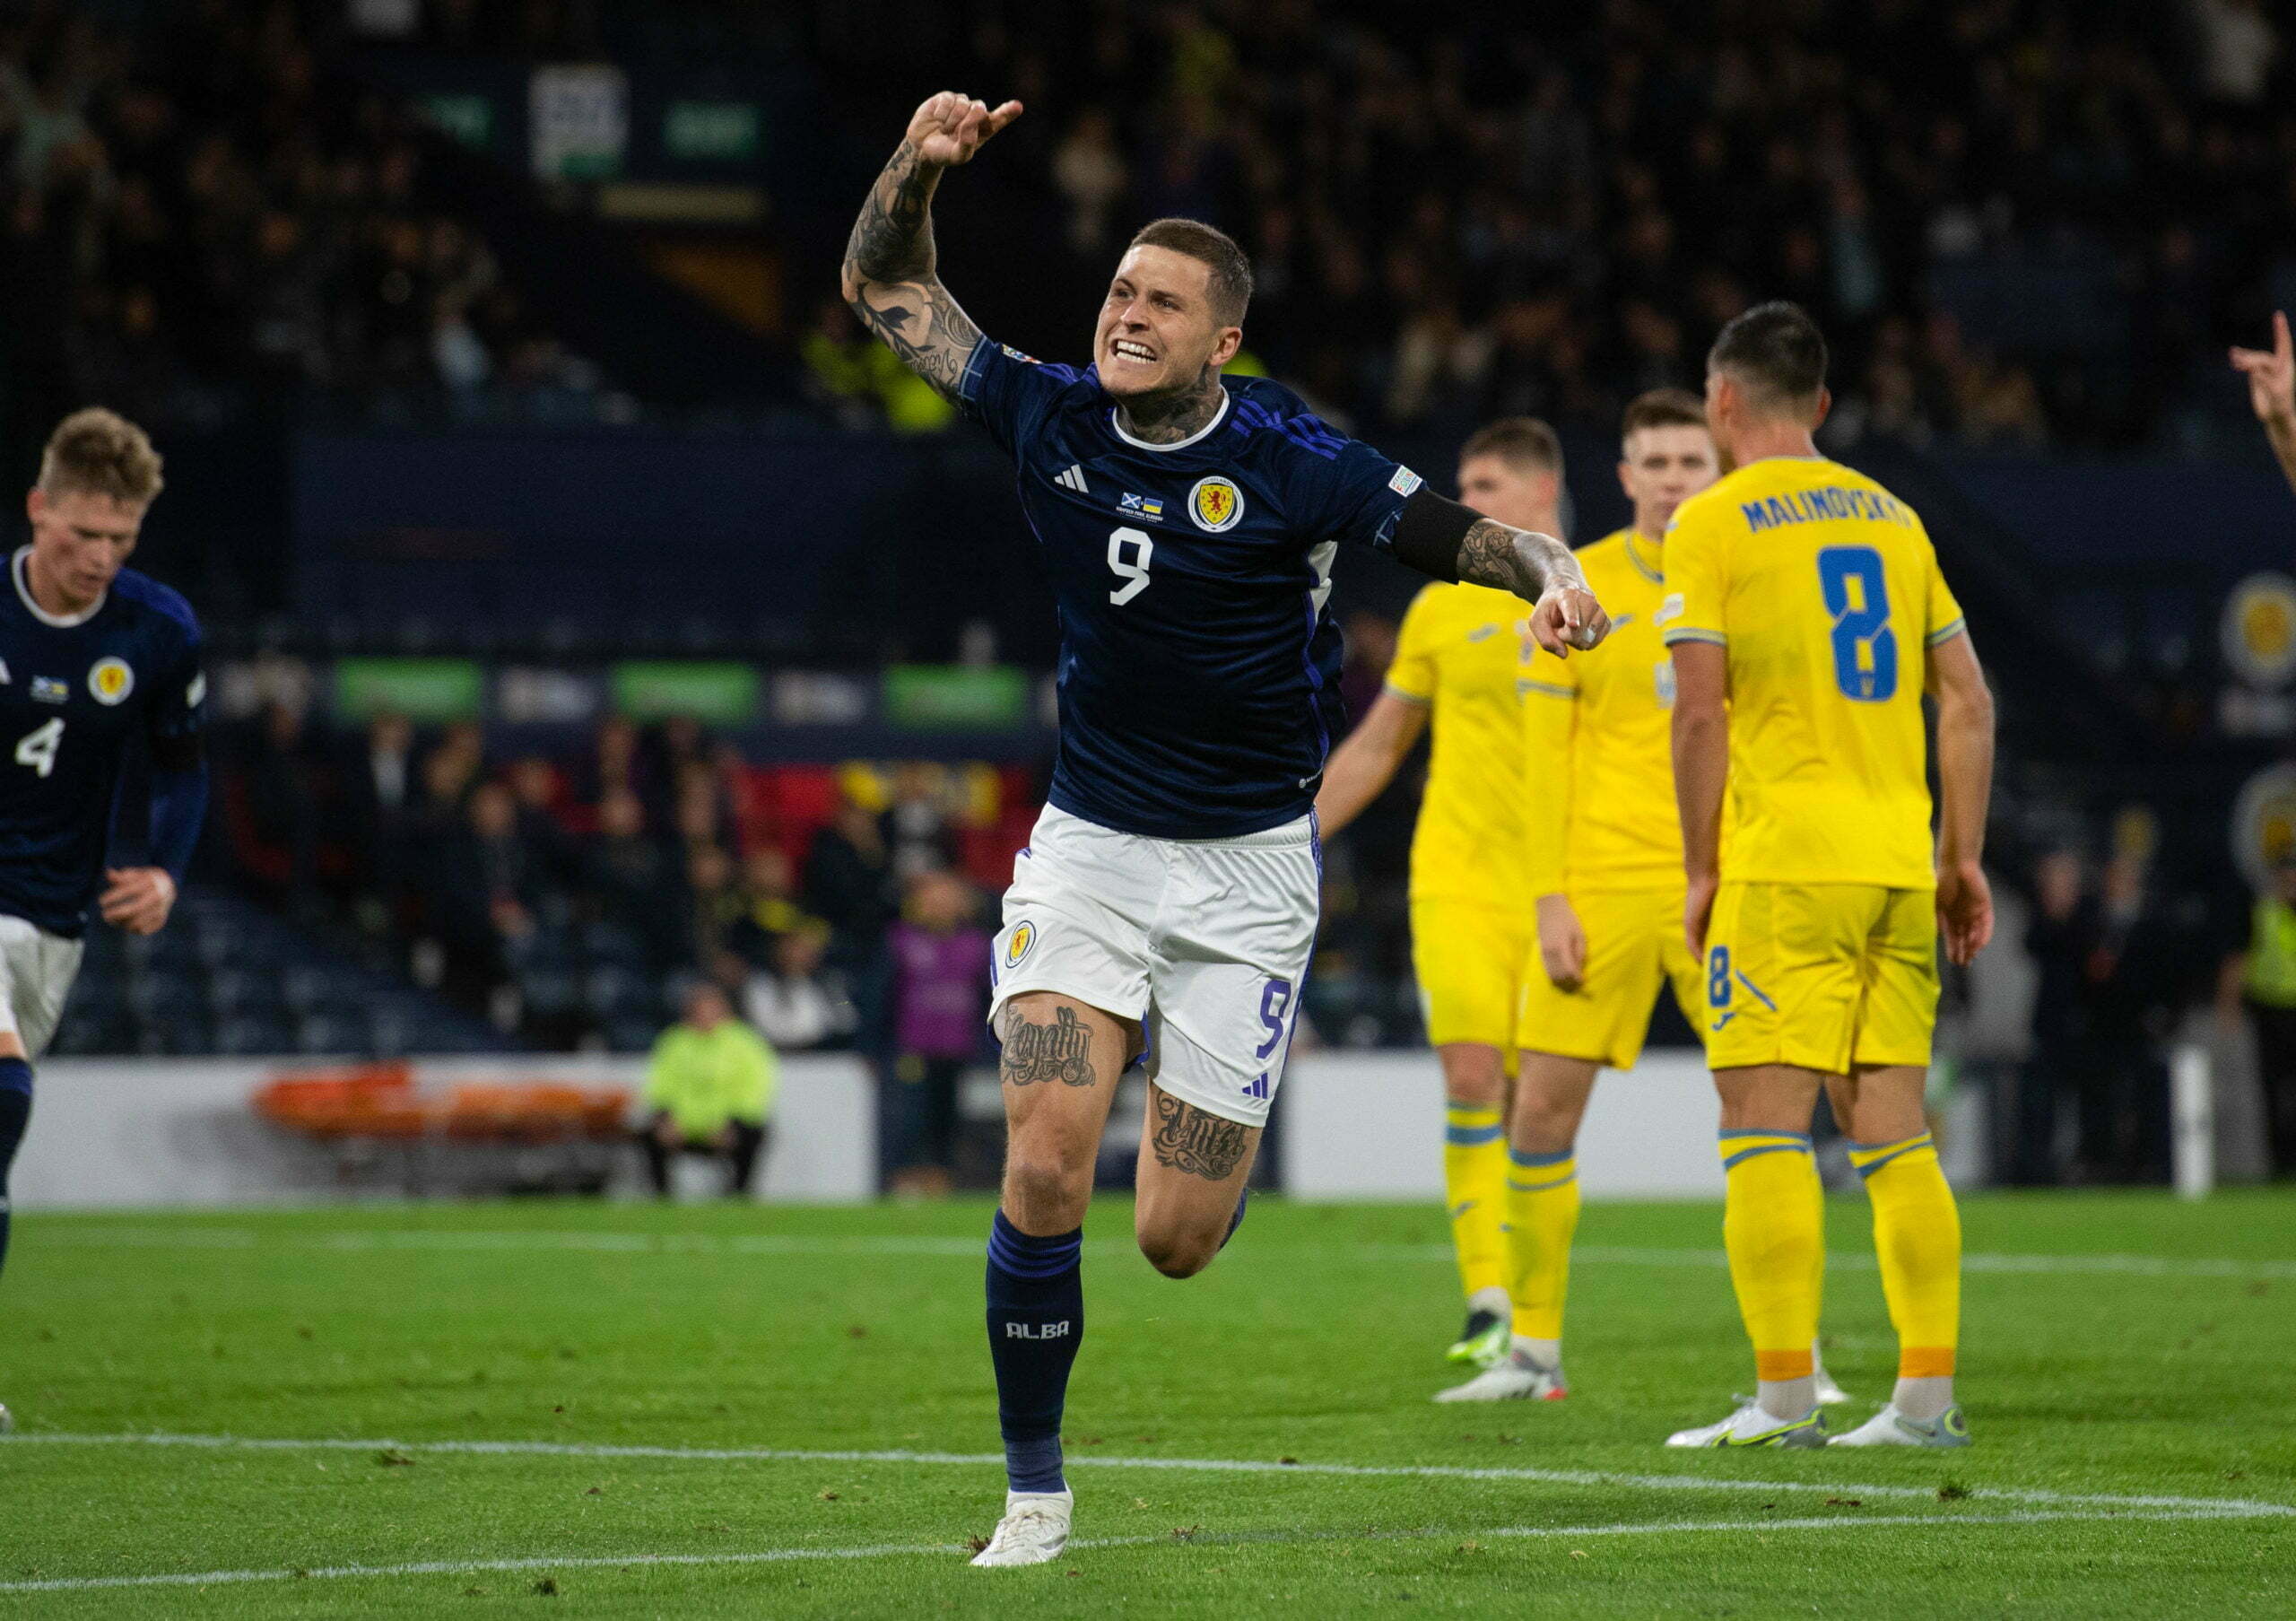 Scotland 3-0 Ukraine – Full Time Report